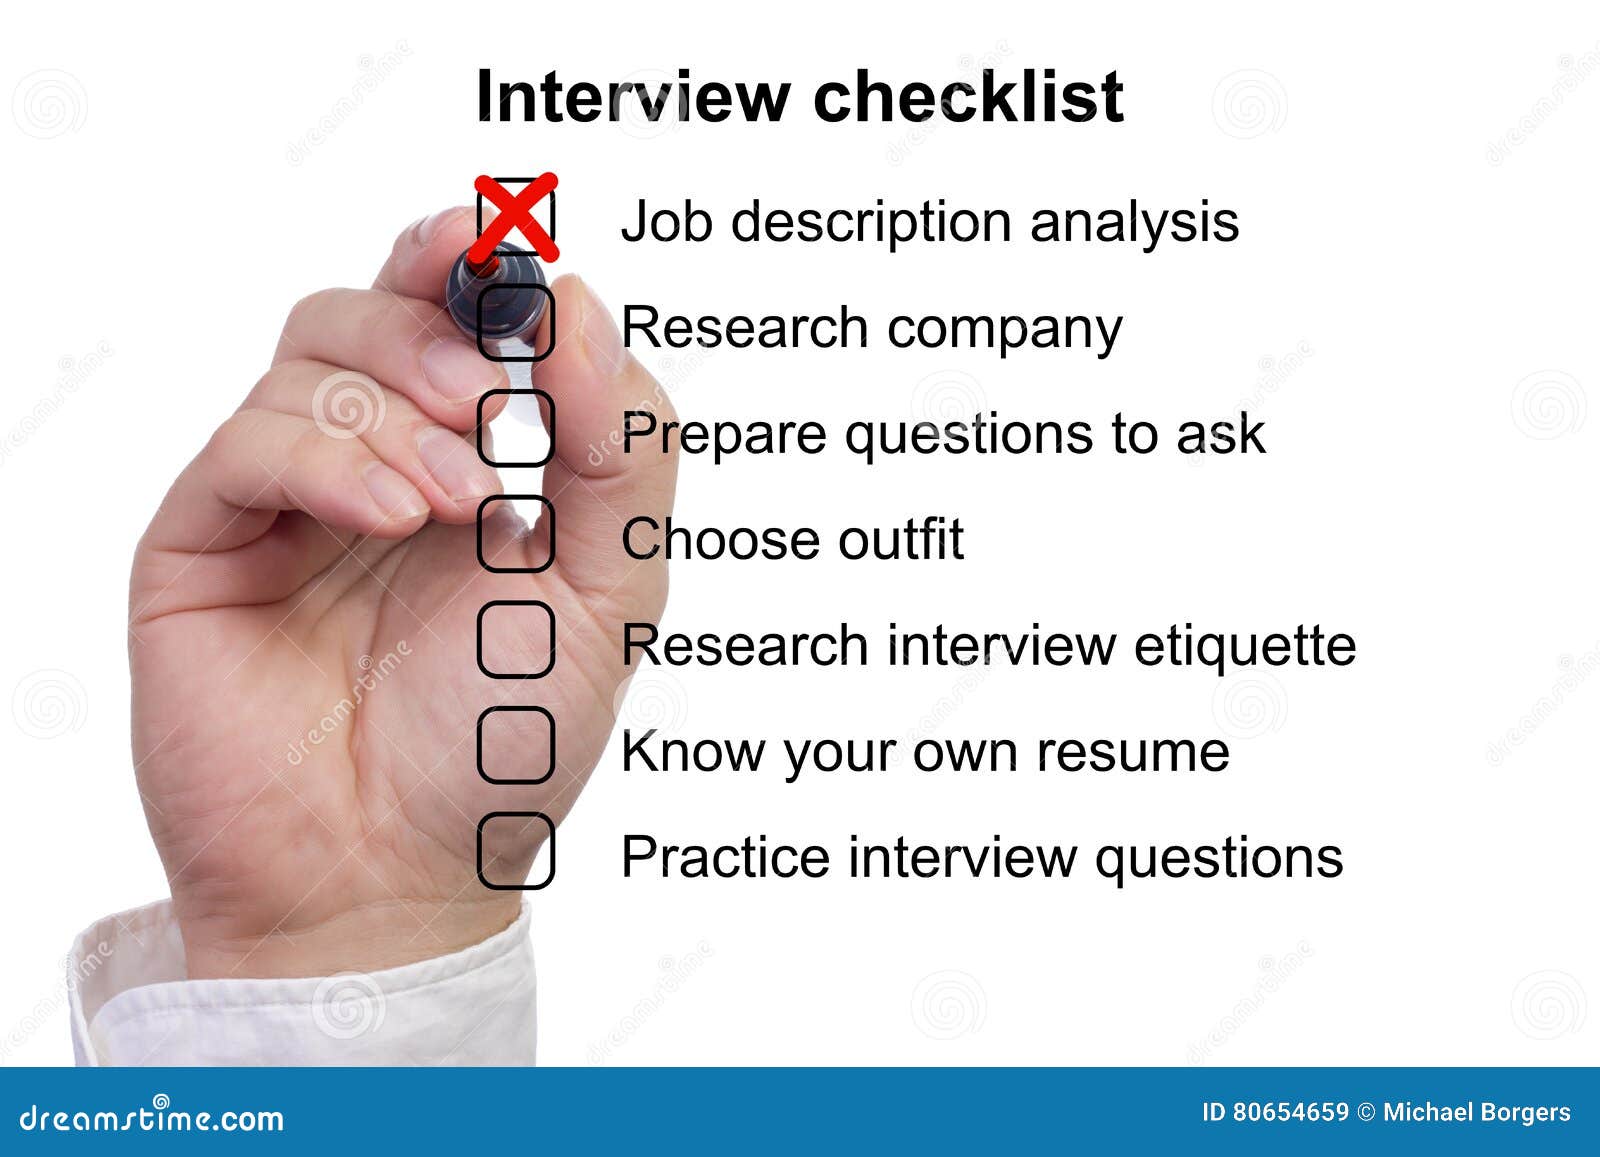 preparation checklist for a job interview